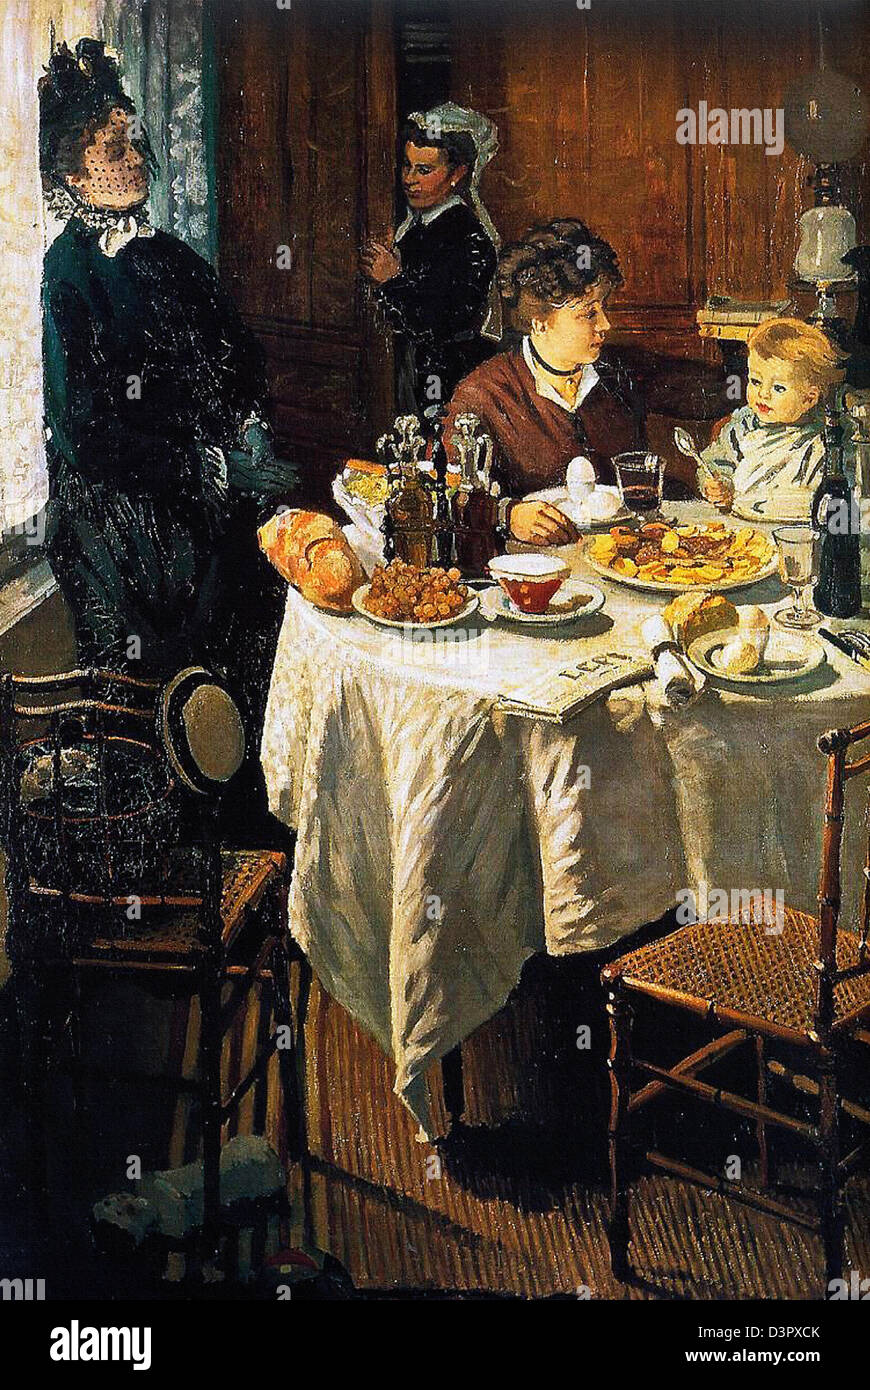 Claude Monet, The Luncheon, 1868, Stadel Museum, Frankfurt Oil on canvas. Stock Photo